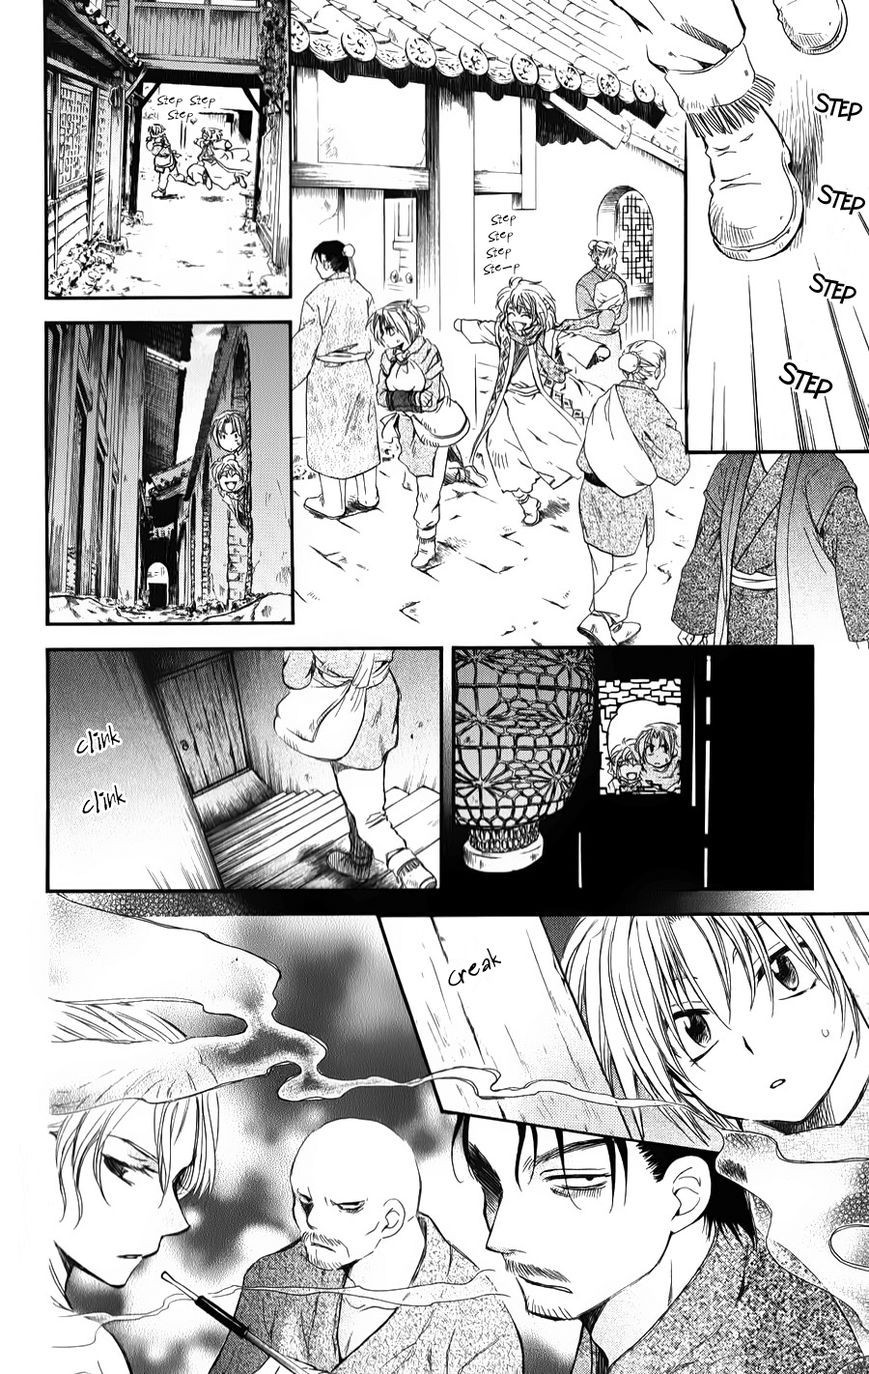 Akatsuki no Yona chapter 67 page 8